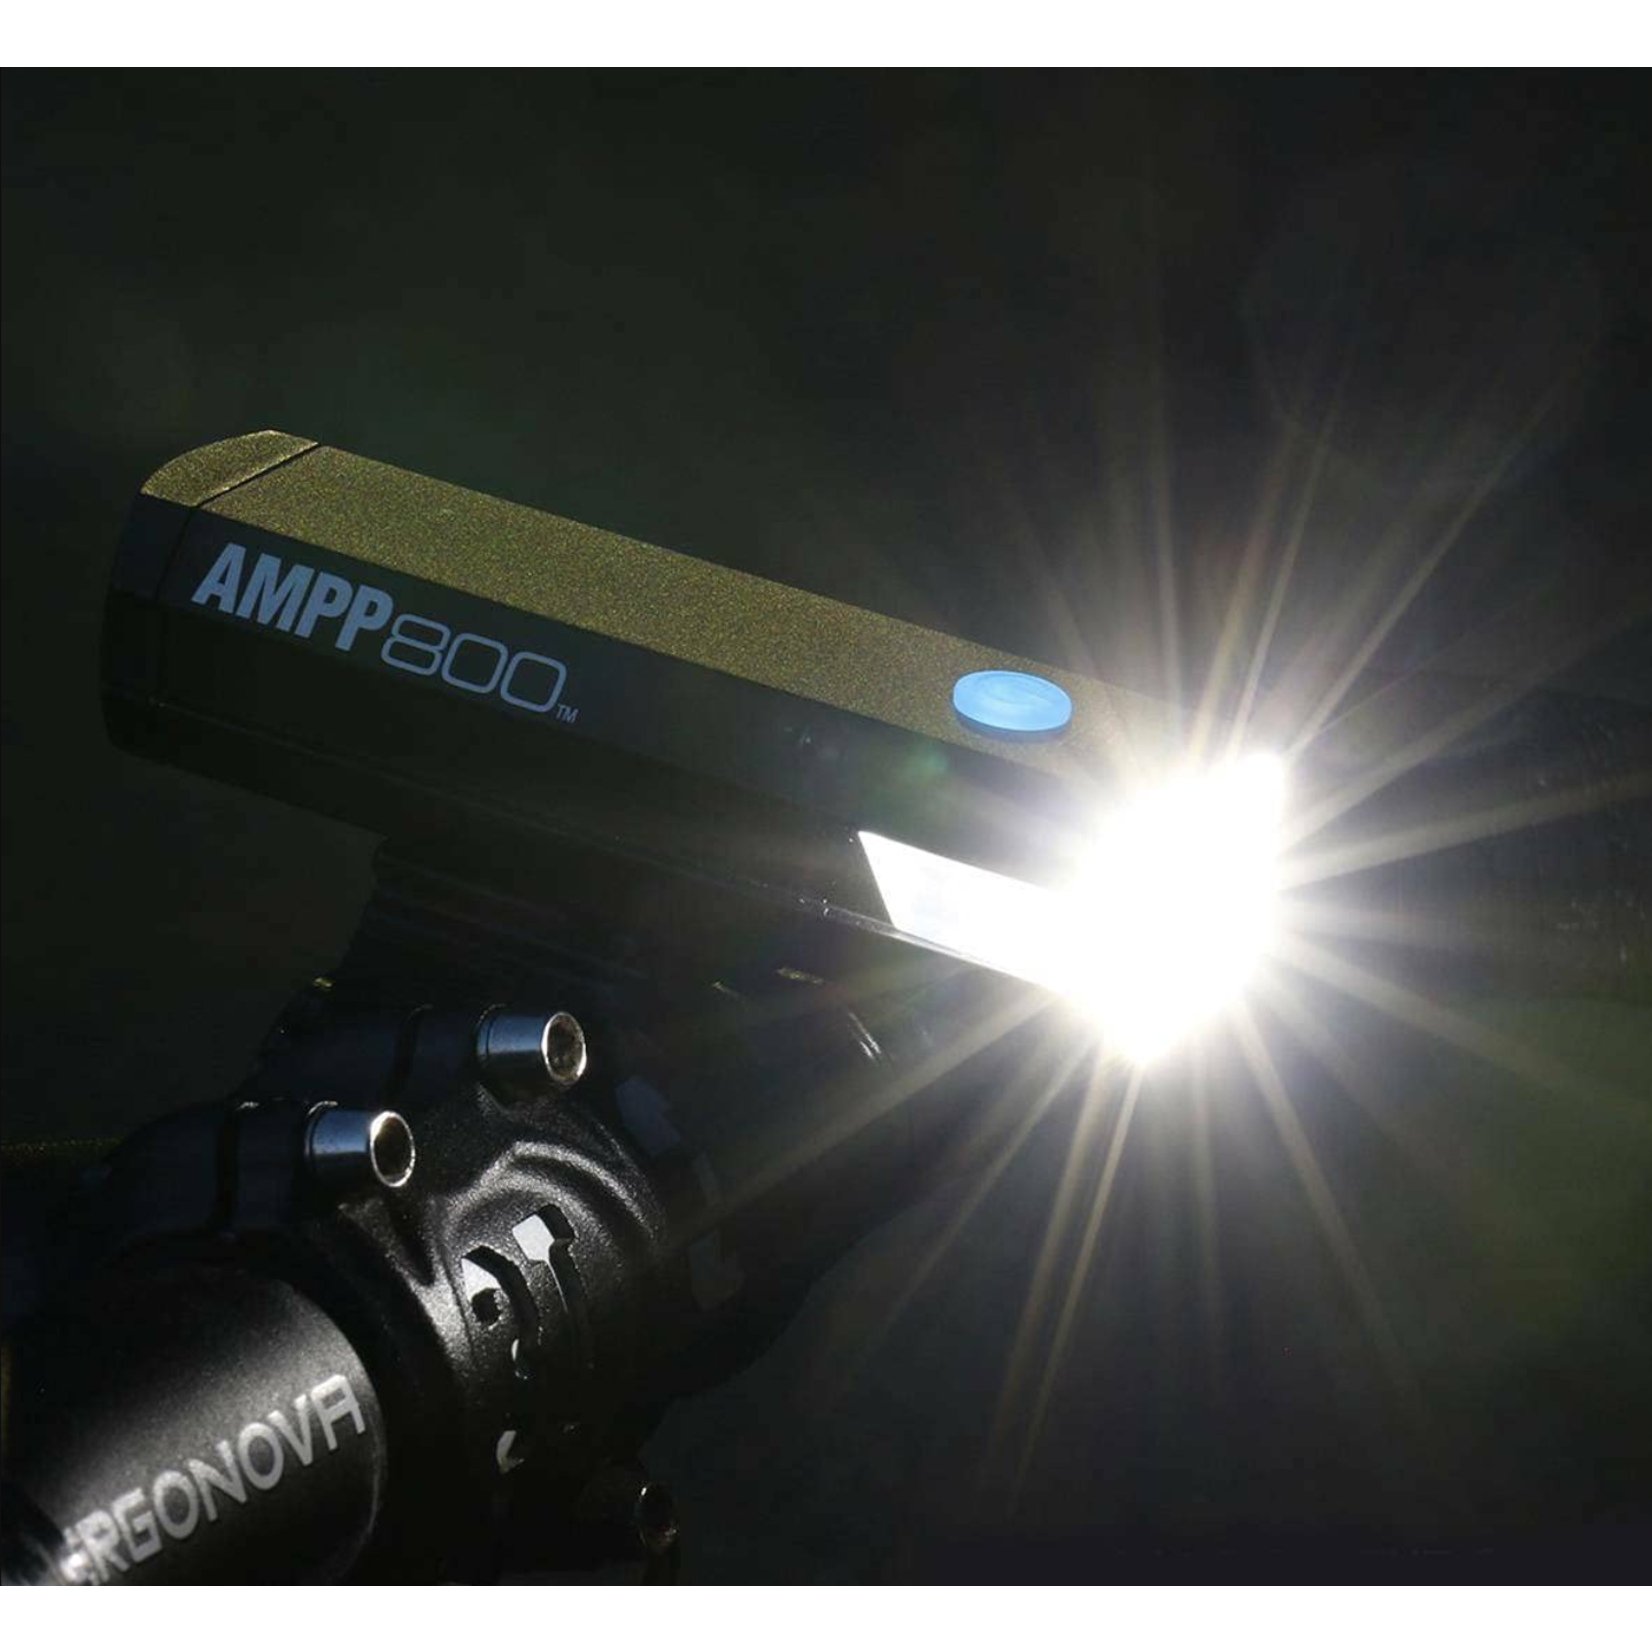 Cateye AMPP 800 front light